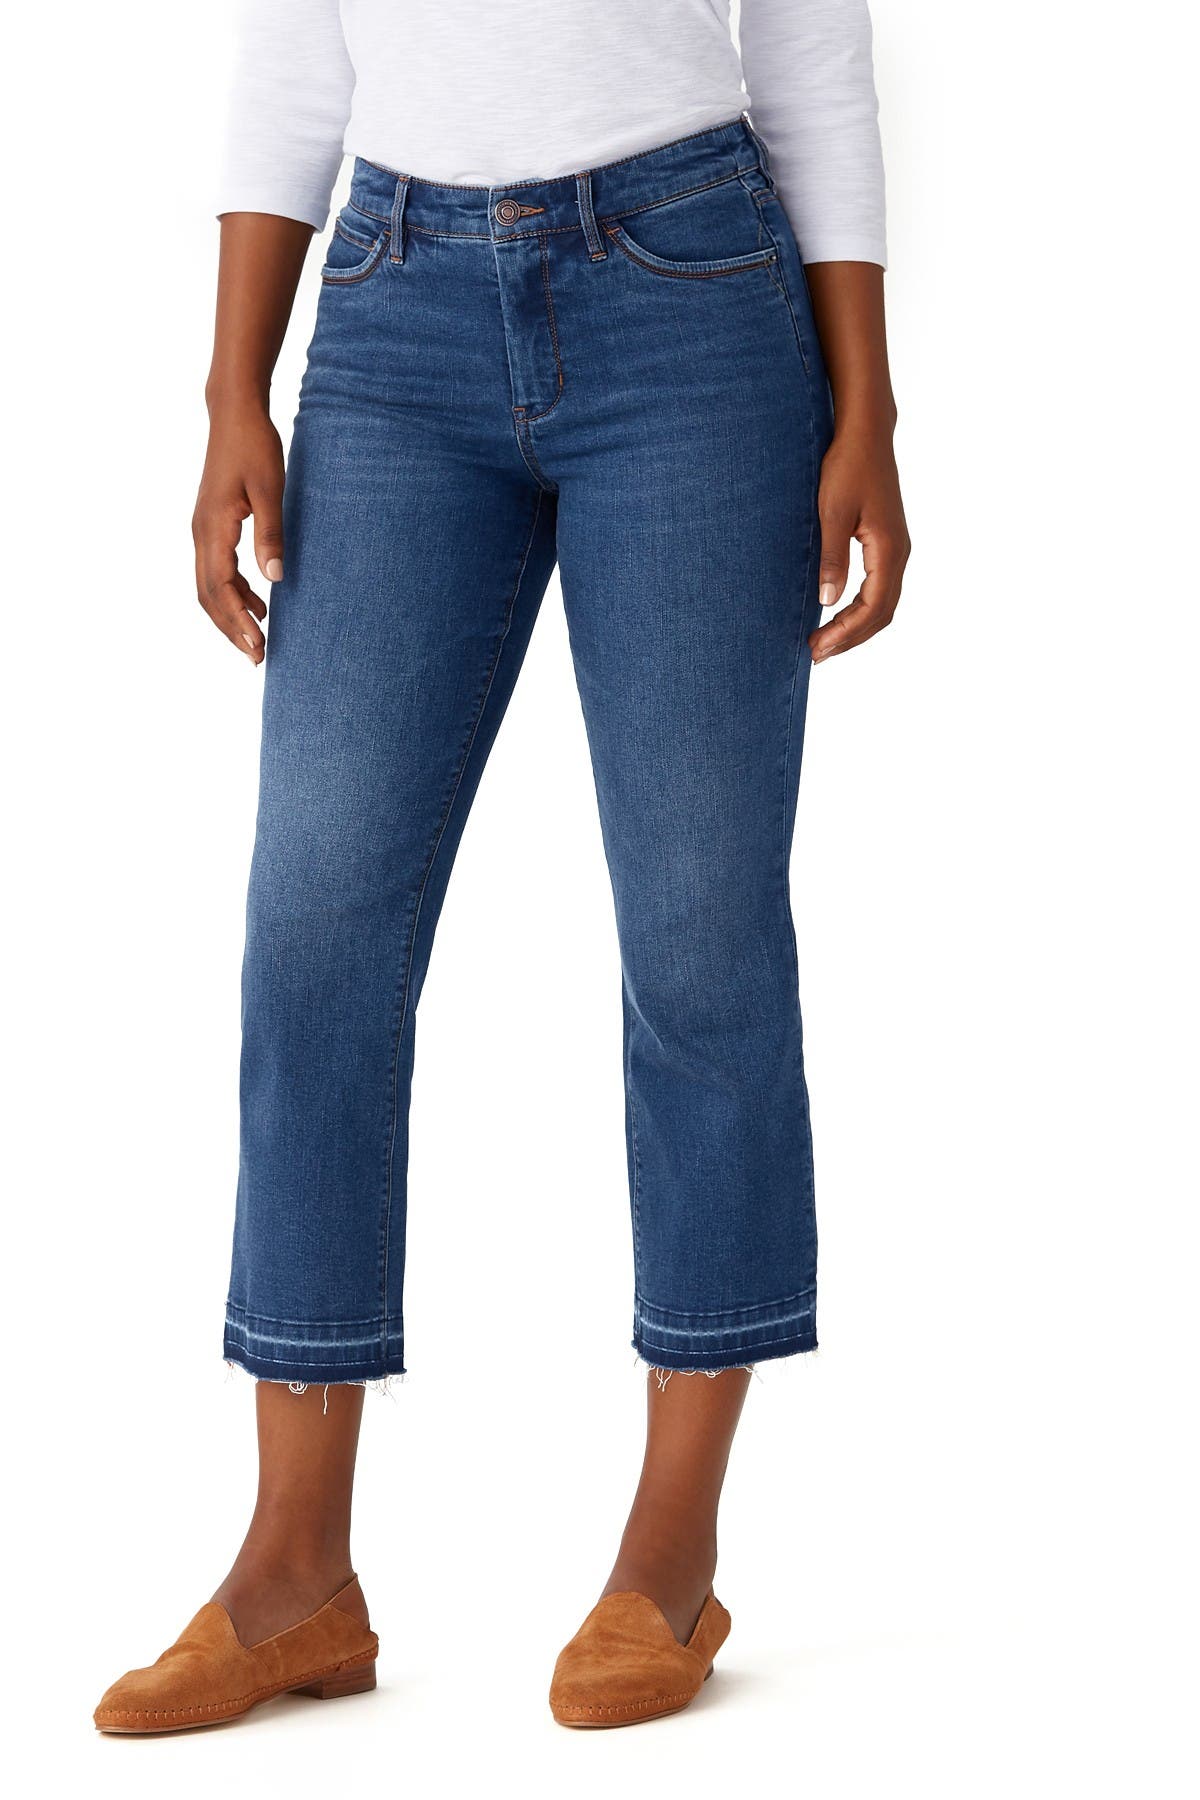 tommy bahama womens jeans